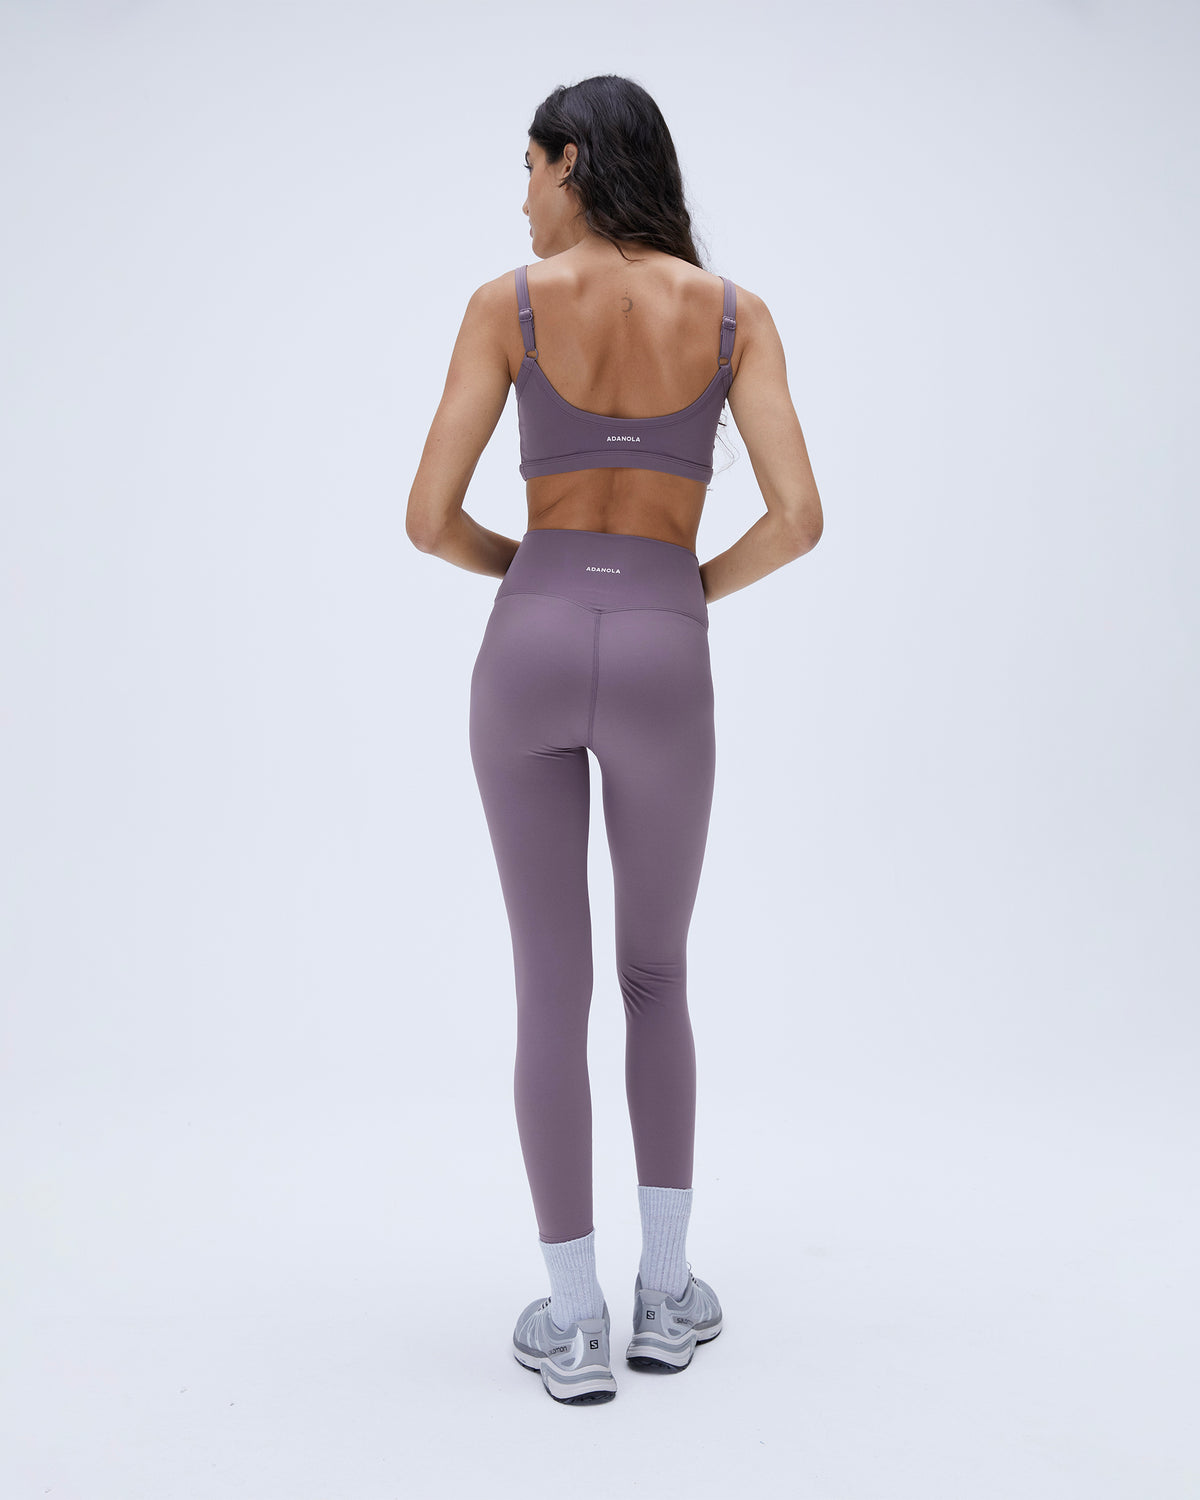 Avia Purples Camo & Black Striped Active Wear Exercise Leggings Women M  8-10 Purple Size M - $16 - From Myrna